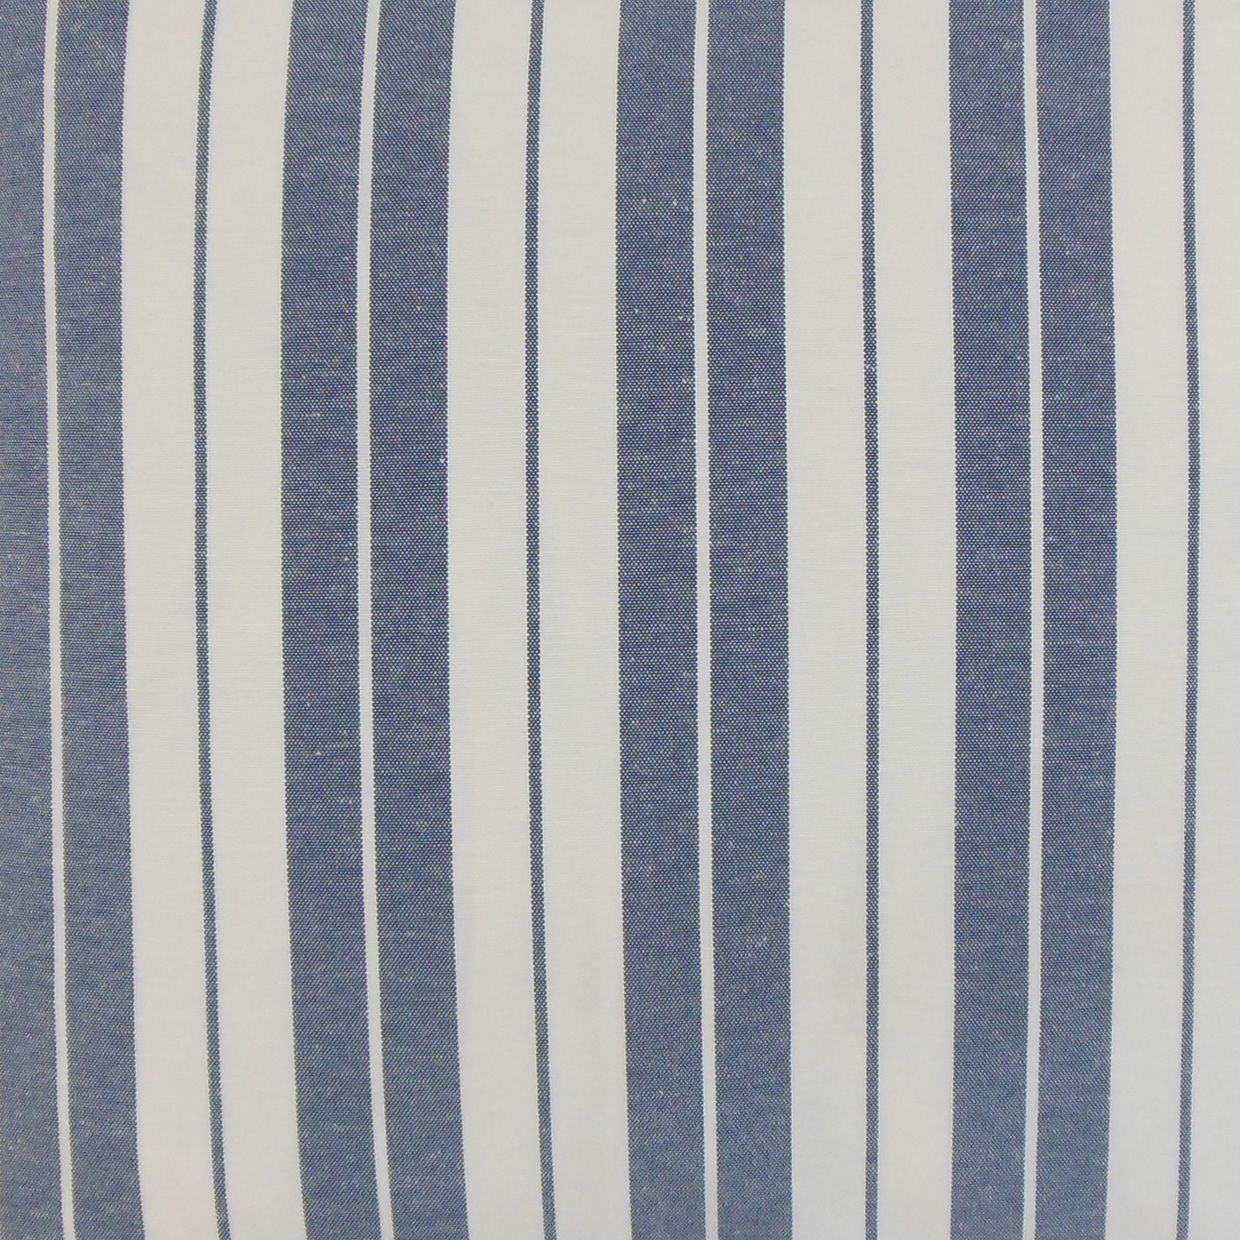 Henley Stripe Pillow, Navy, 20" x 20" - Image 1